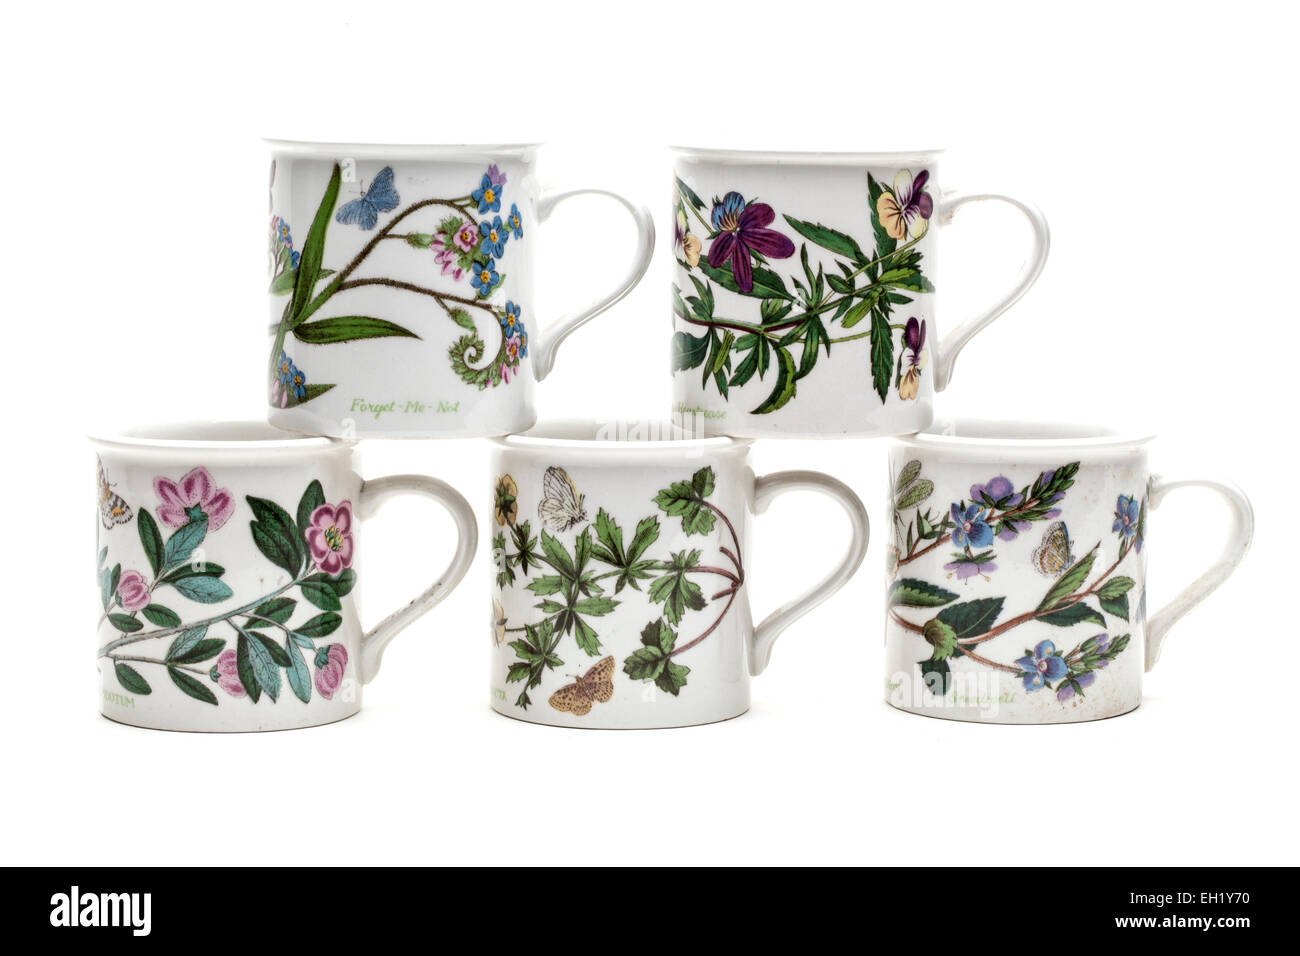 5 Portmeirion Botanic Garden Small Coffer Cups / Mugs Stock Photo - Alamy